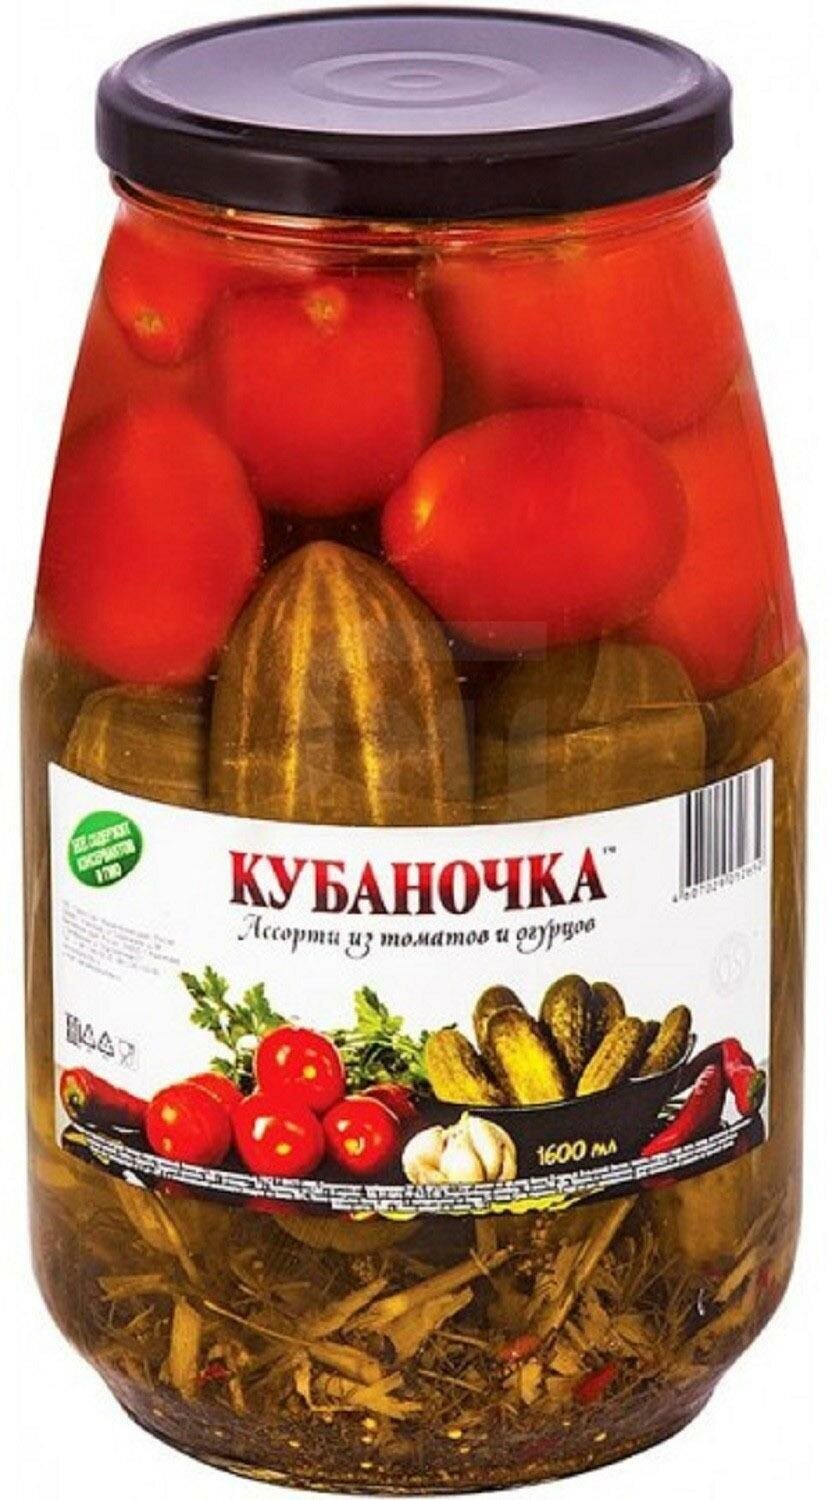 Ассорти из томатов и огурцов 1500-1600мл кубаночка